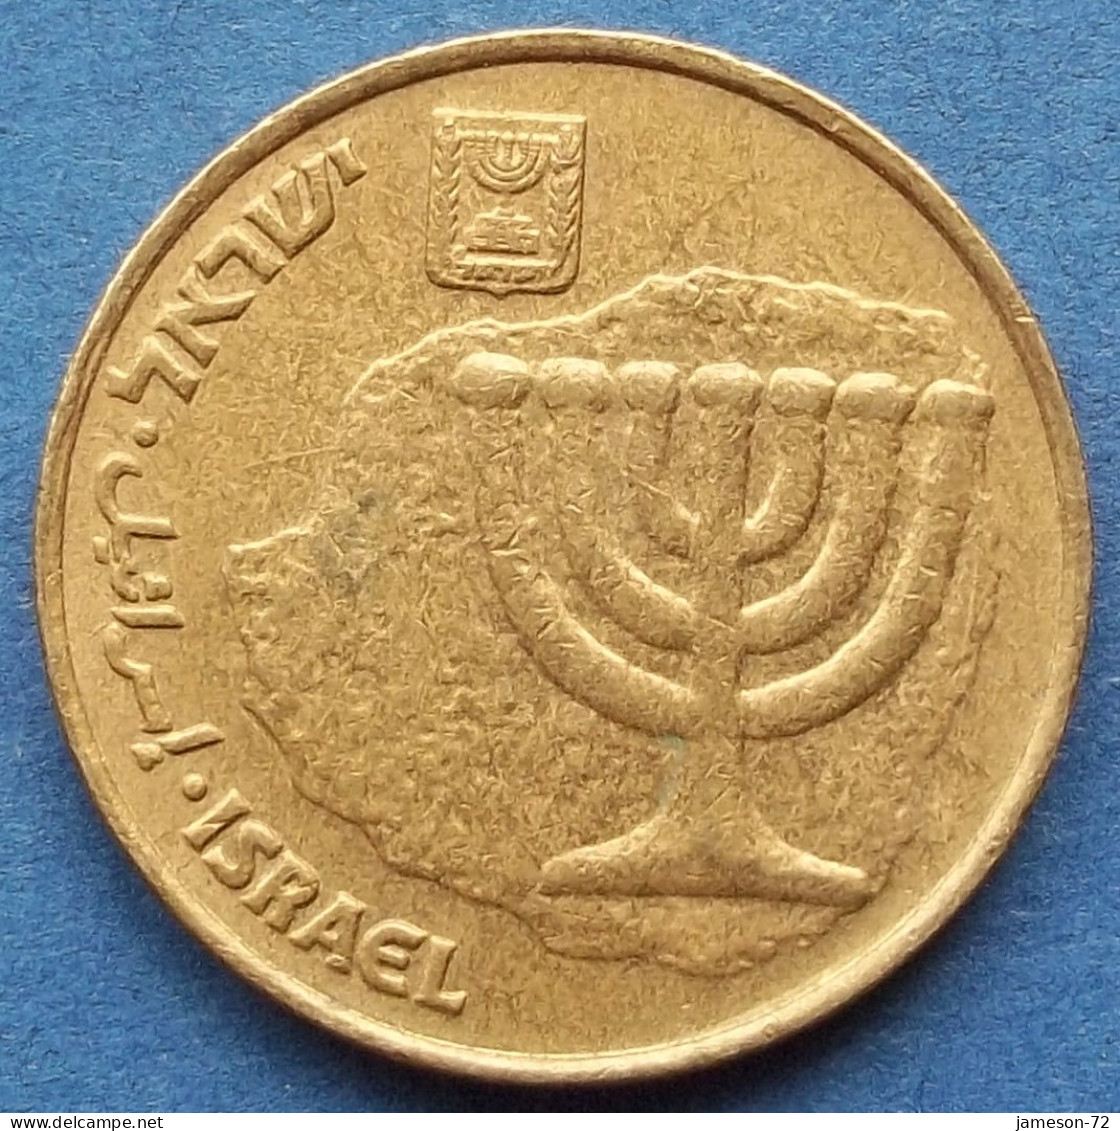 ISRAEL - 10 Agorot JE 5760 (2000AD) "Menorah" KM# 158 Monetary Reform (1985) - Edelweiss Coins - Israel